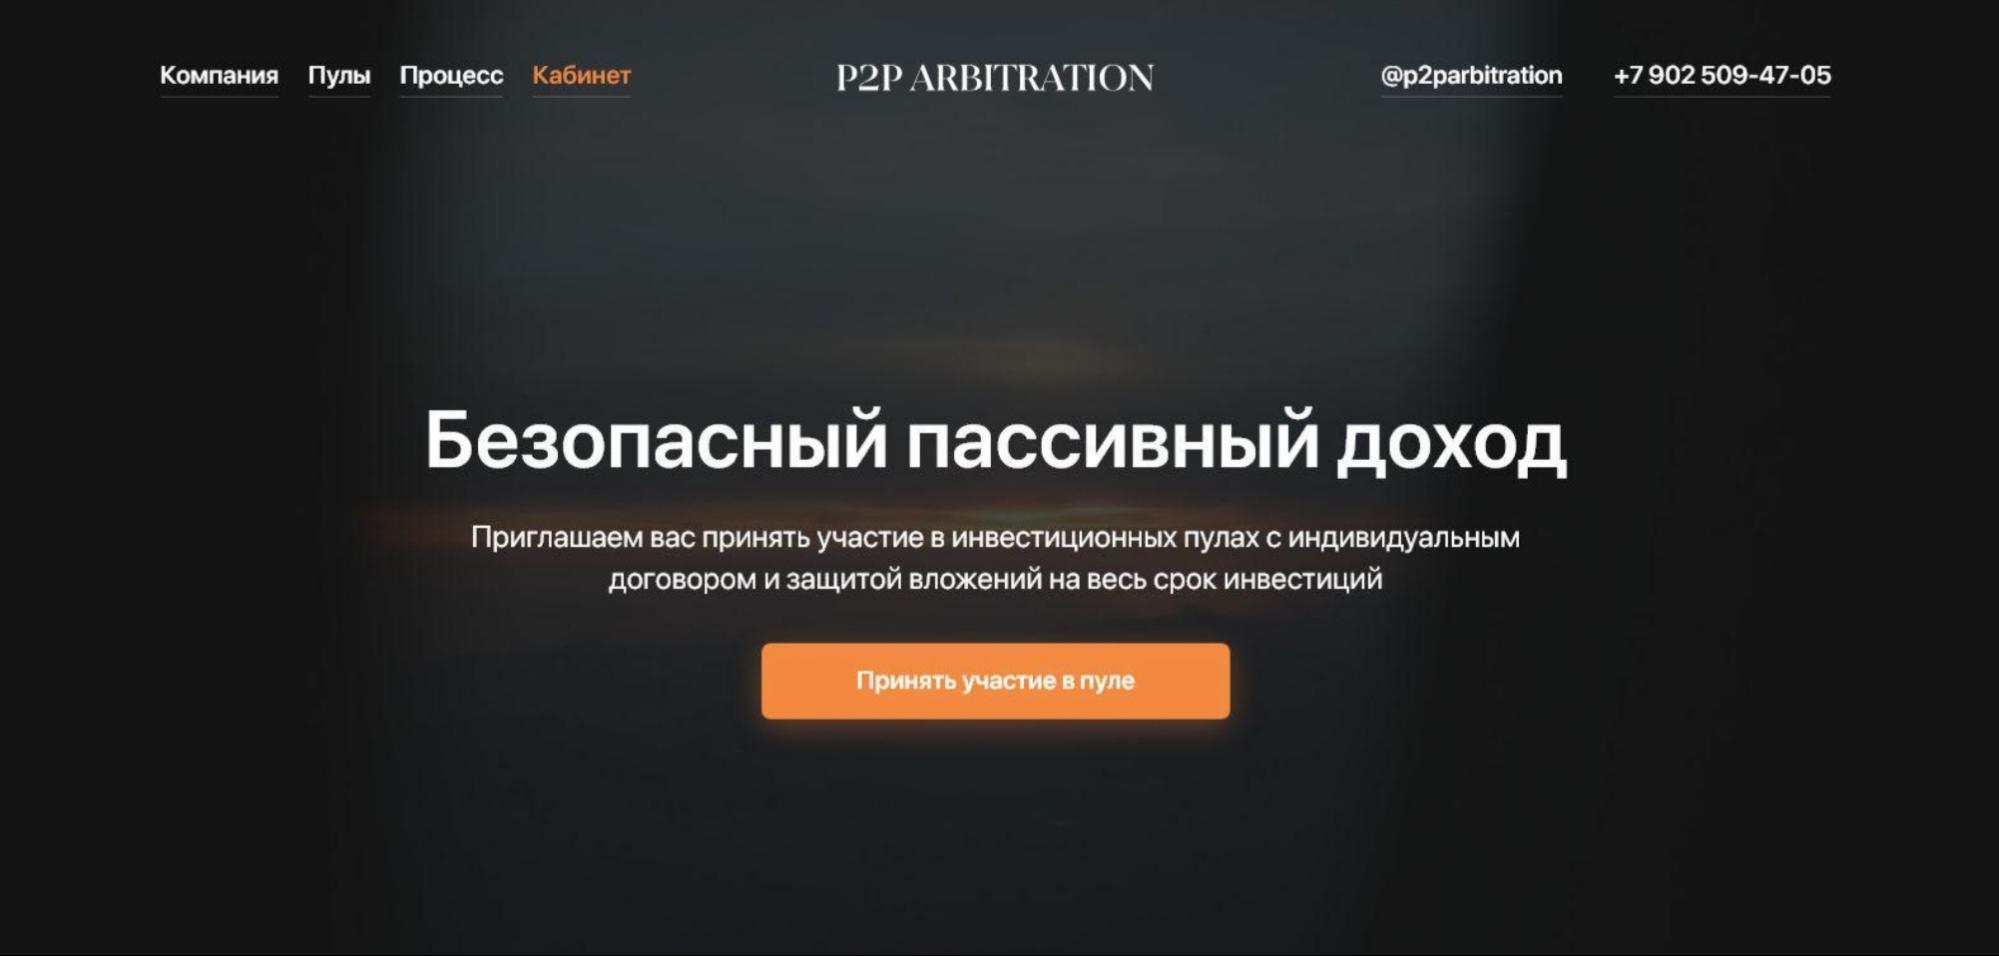 P2parbitration сайт